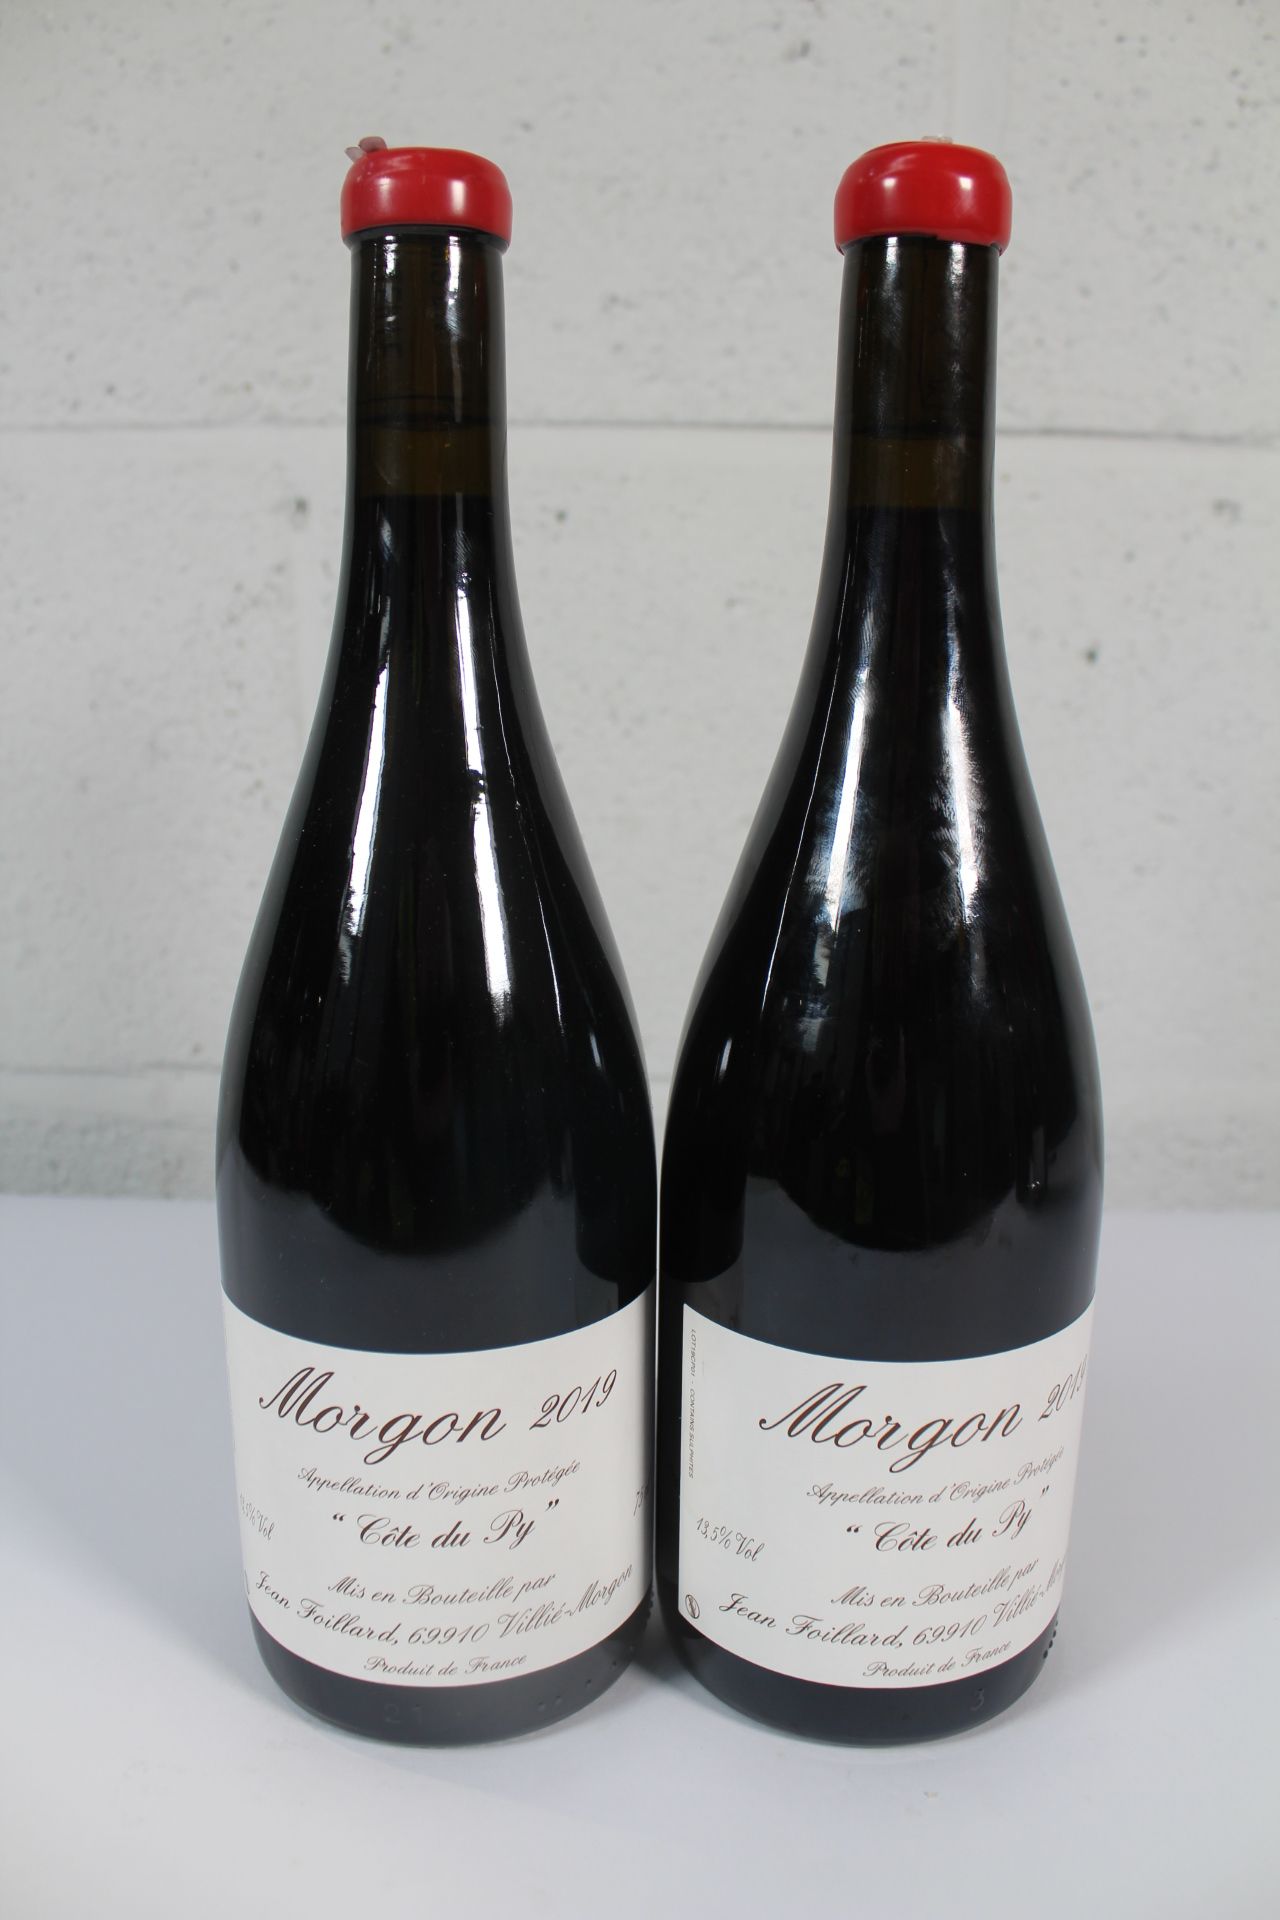 Two Jean Foillard Morgan 2019 Cote Du PY Red Wine 2 x 750ml.